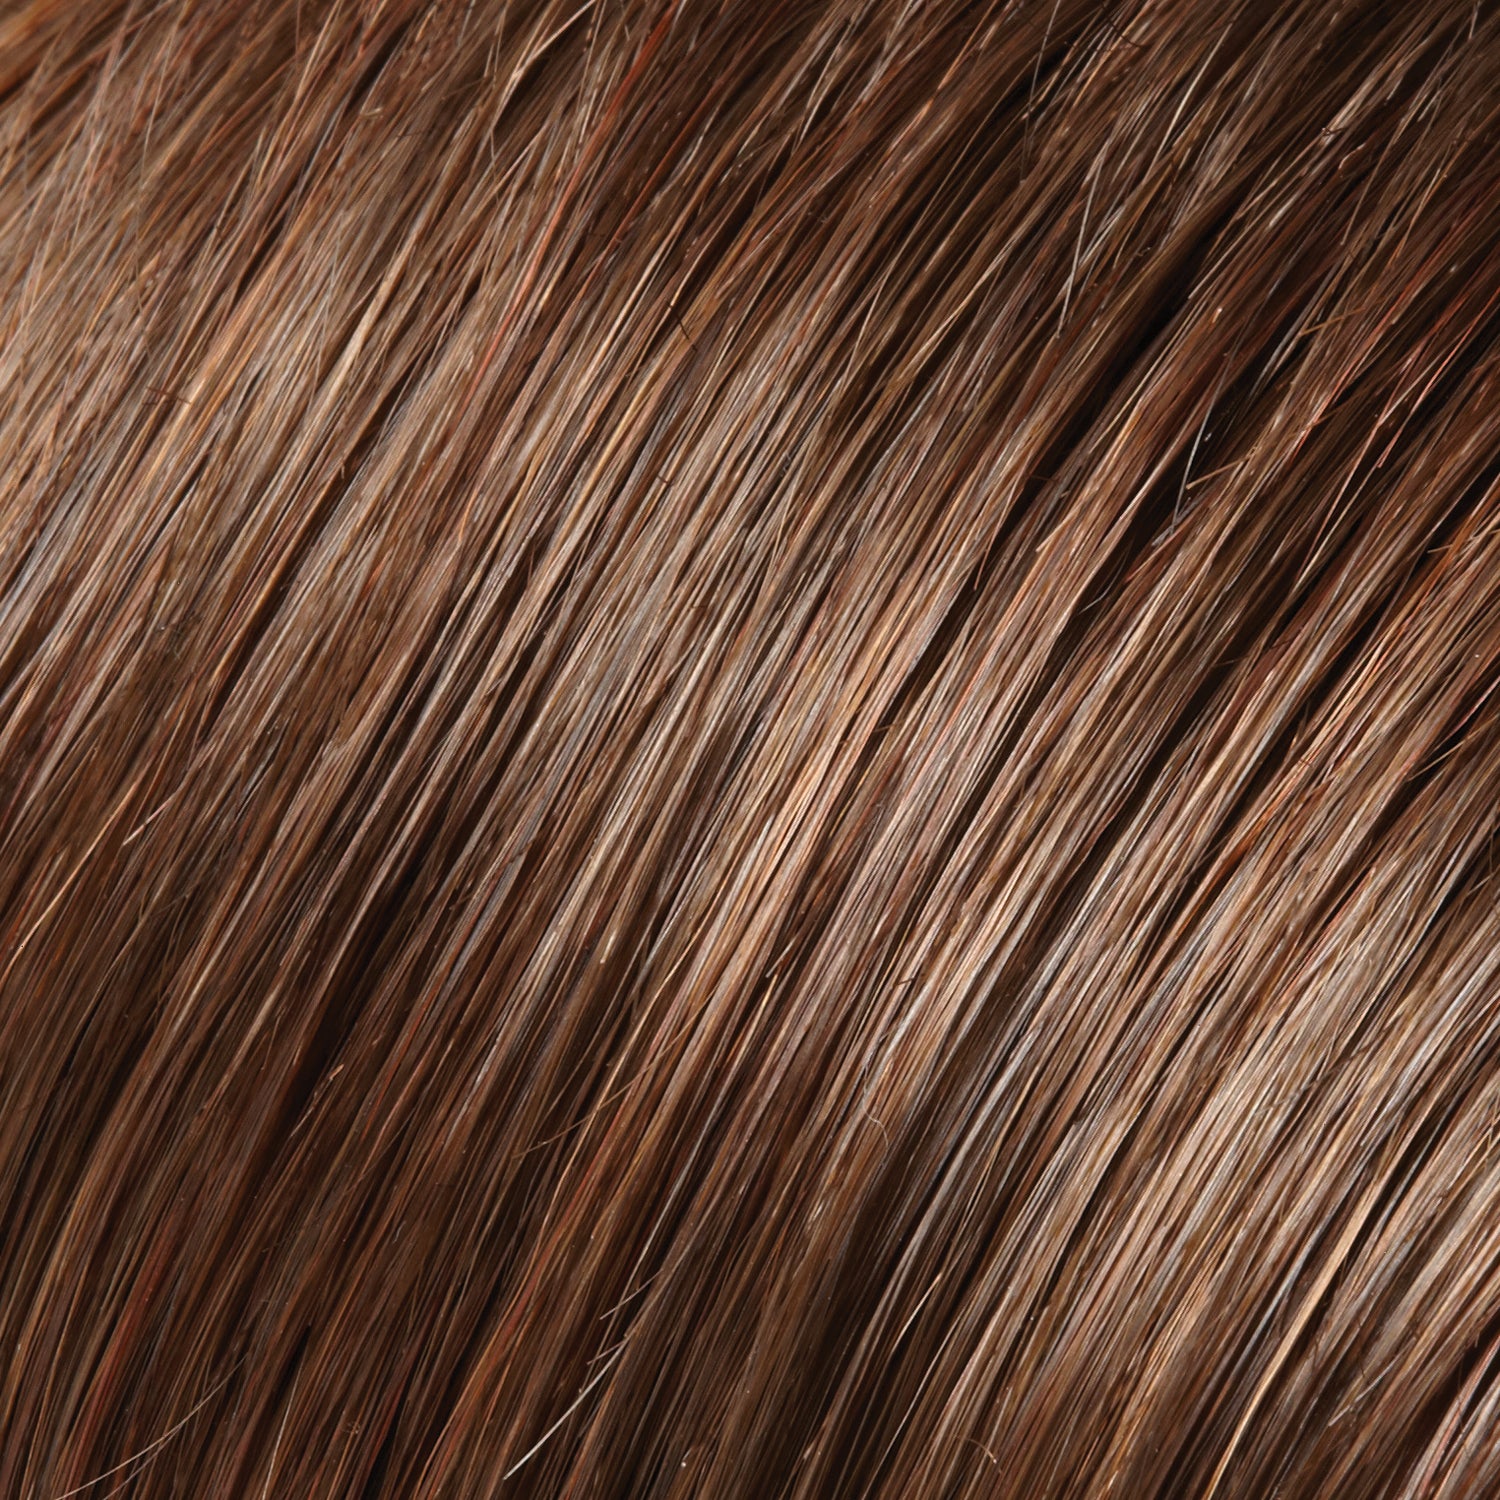 Jennifer wig - Jon Renau SmartLace Human Hair Collection